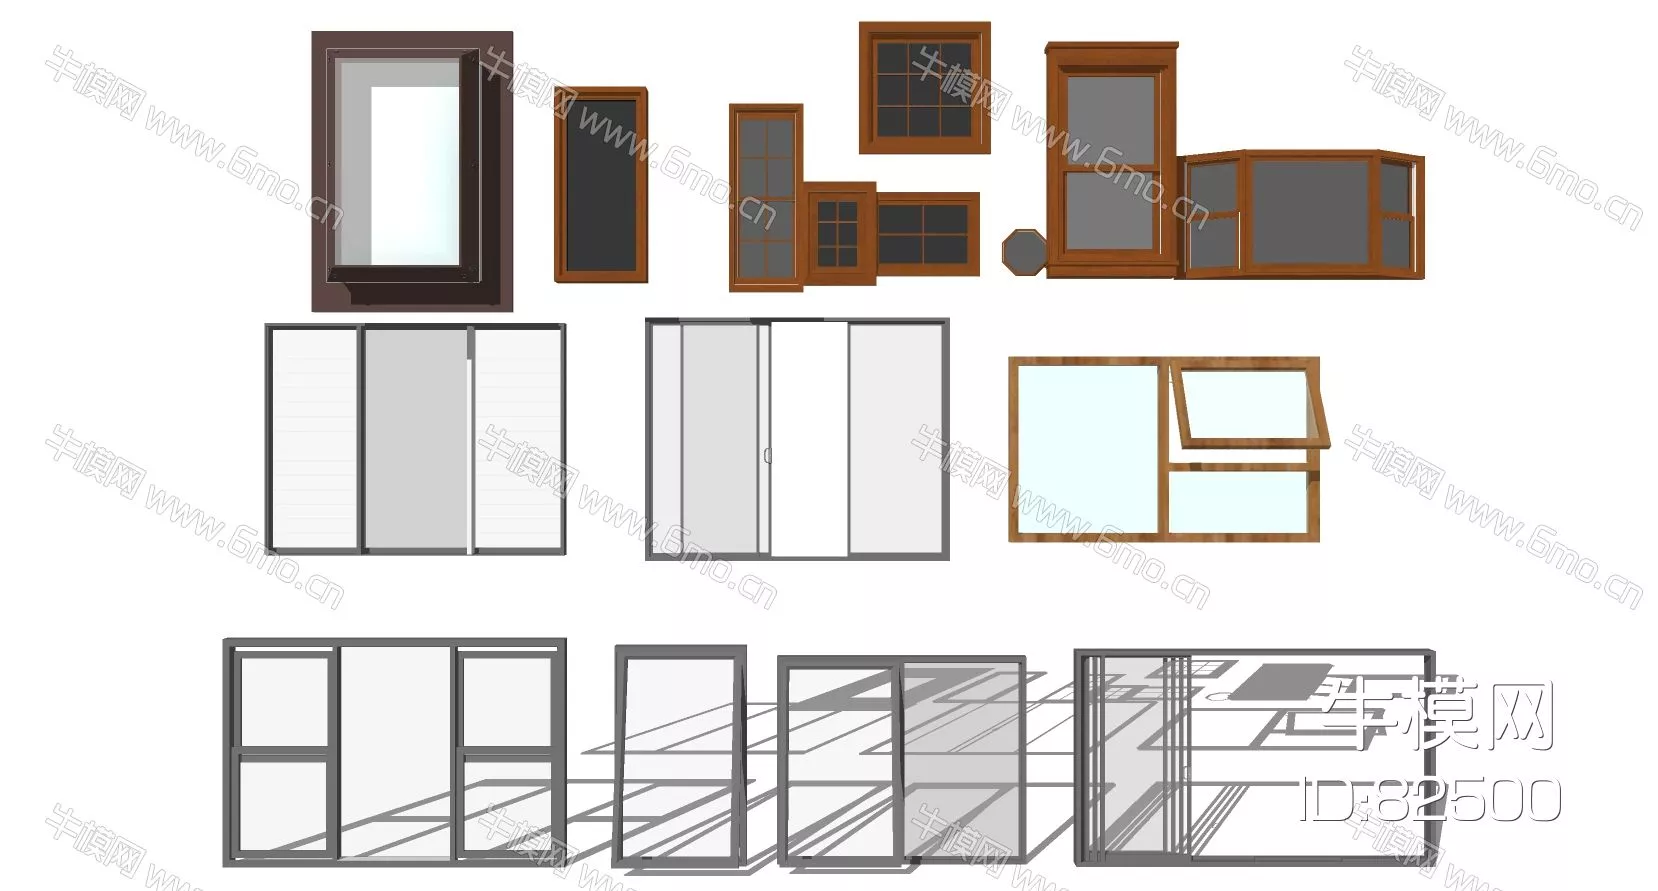 MODERN DOOR AND WINDOWS - SKETCHUP 3D MODEL - ENSCAPE - 82500